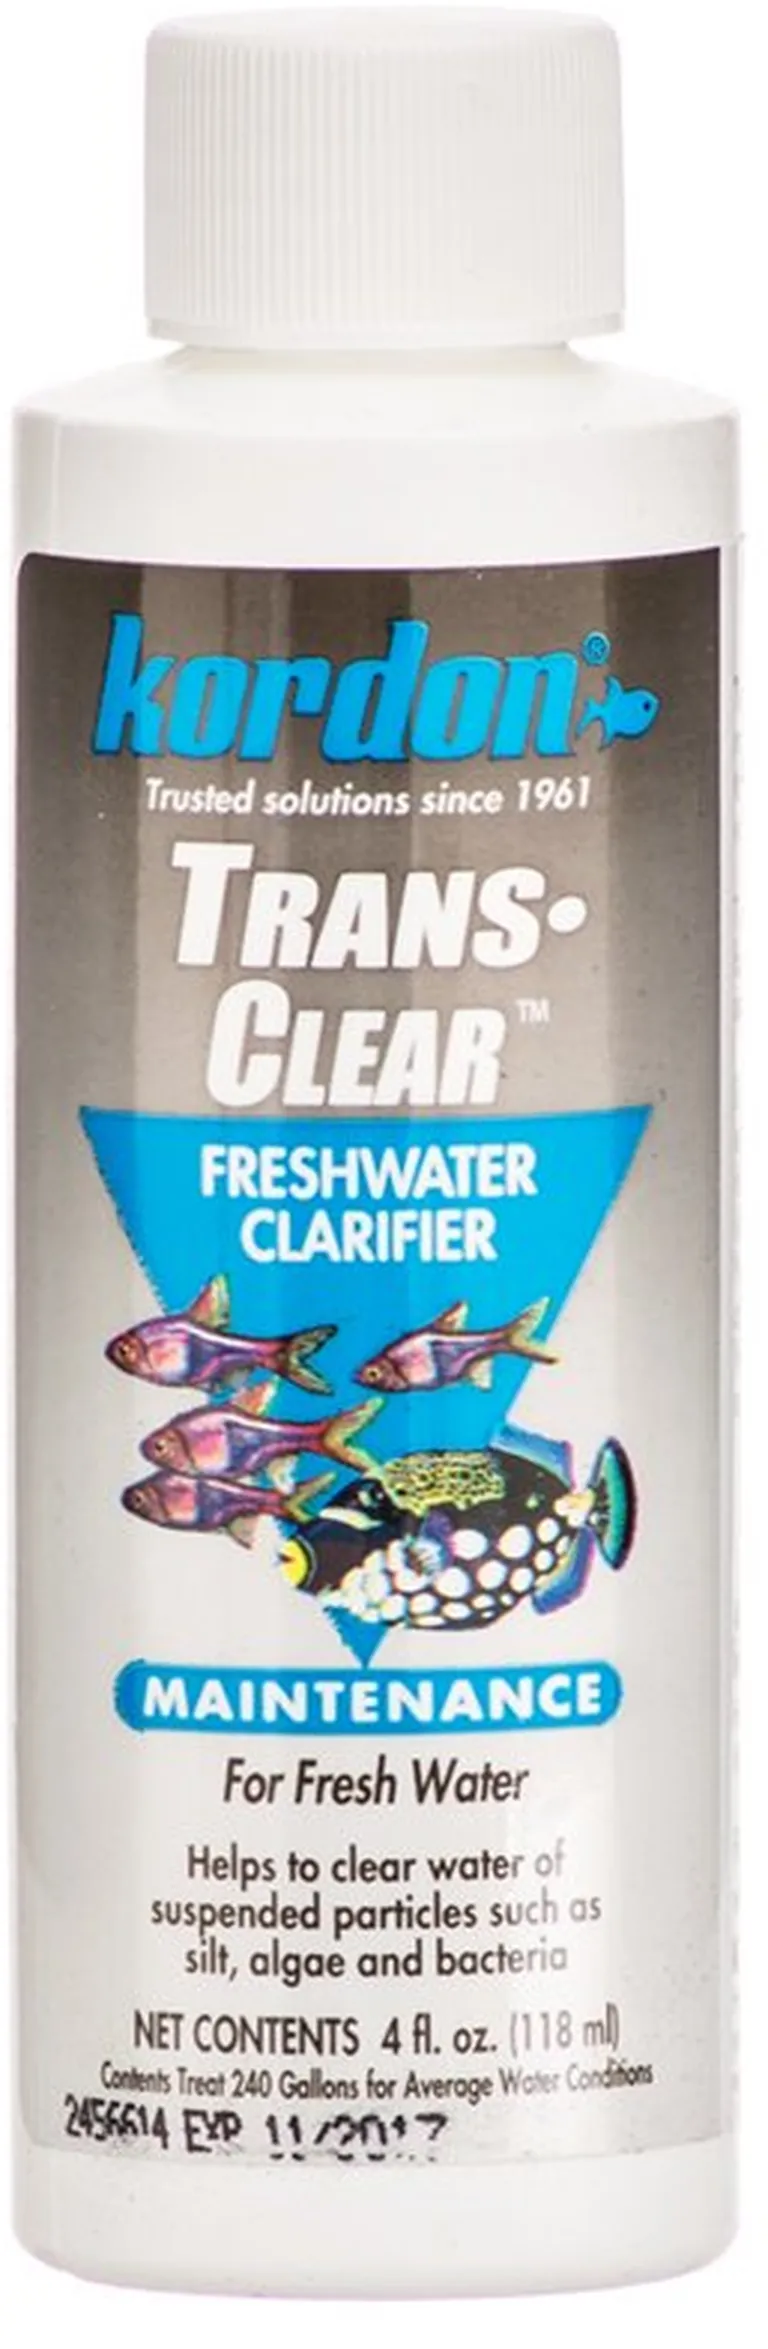 Kordon Trans Clear Freshwater Clarifier for Aquariums Photo 1